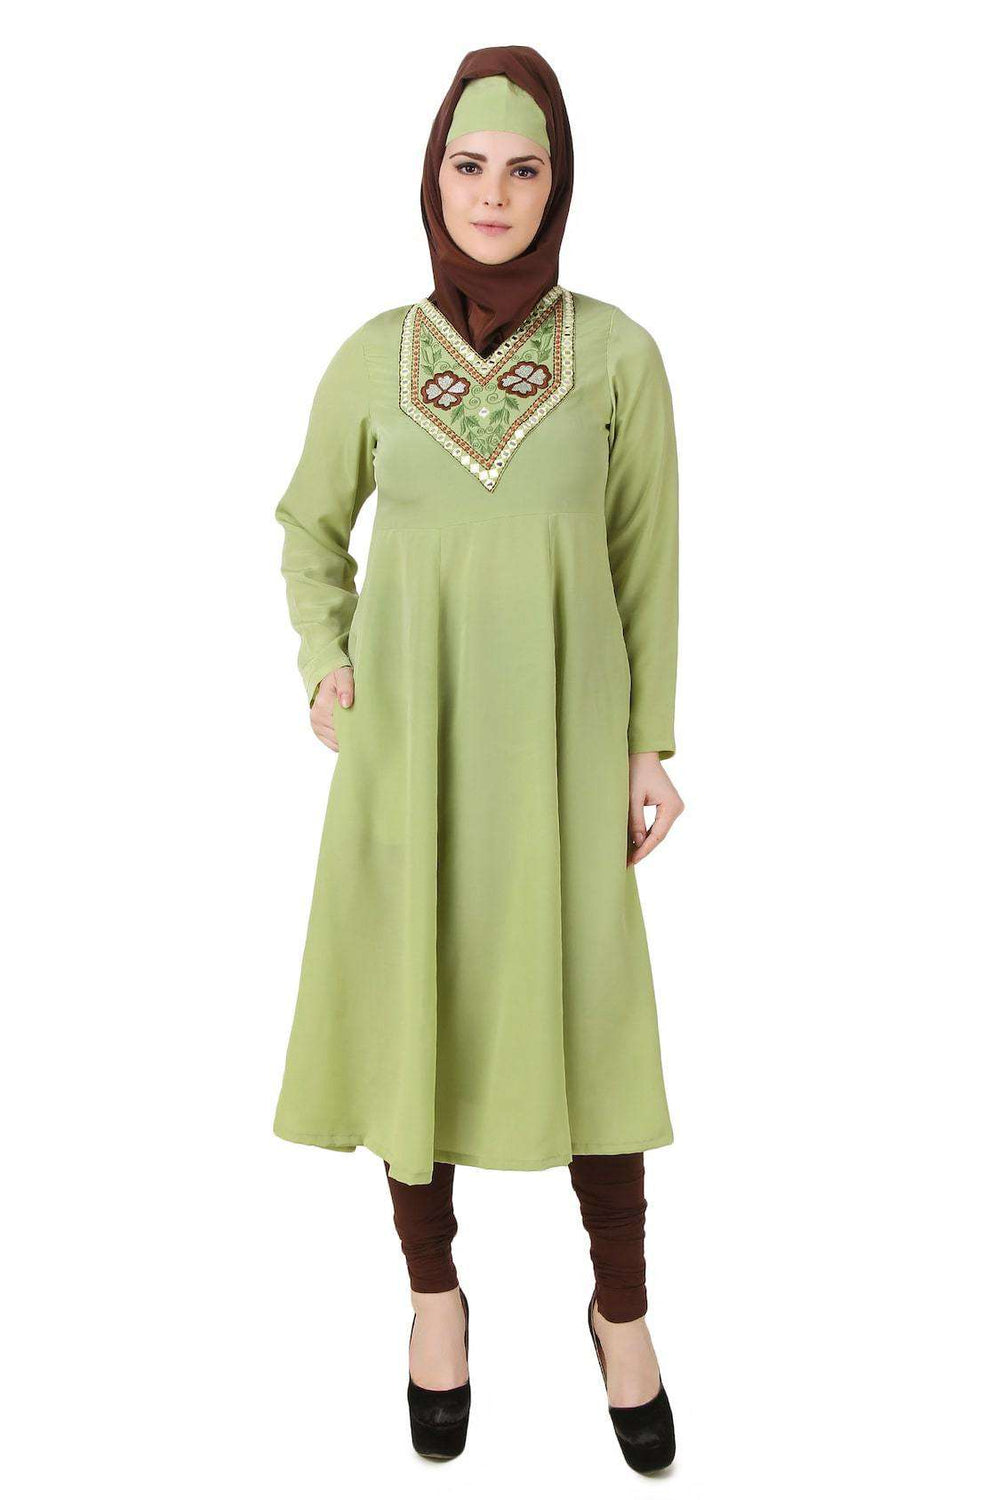 Ghusoon Parrot Green Crepe Short Abaya Design